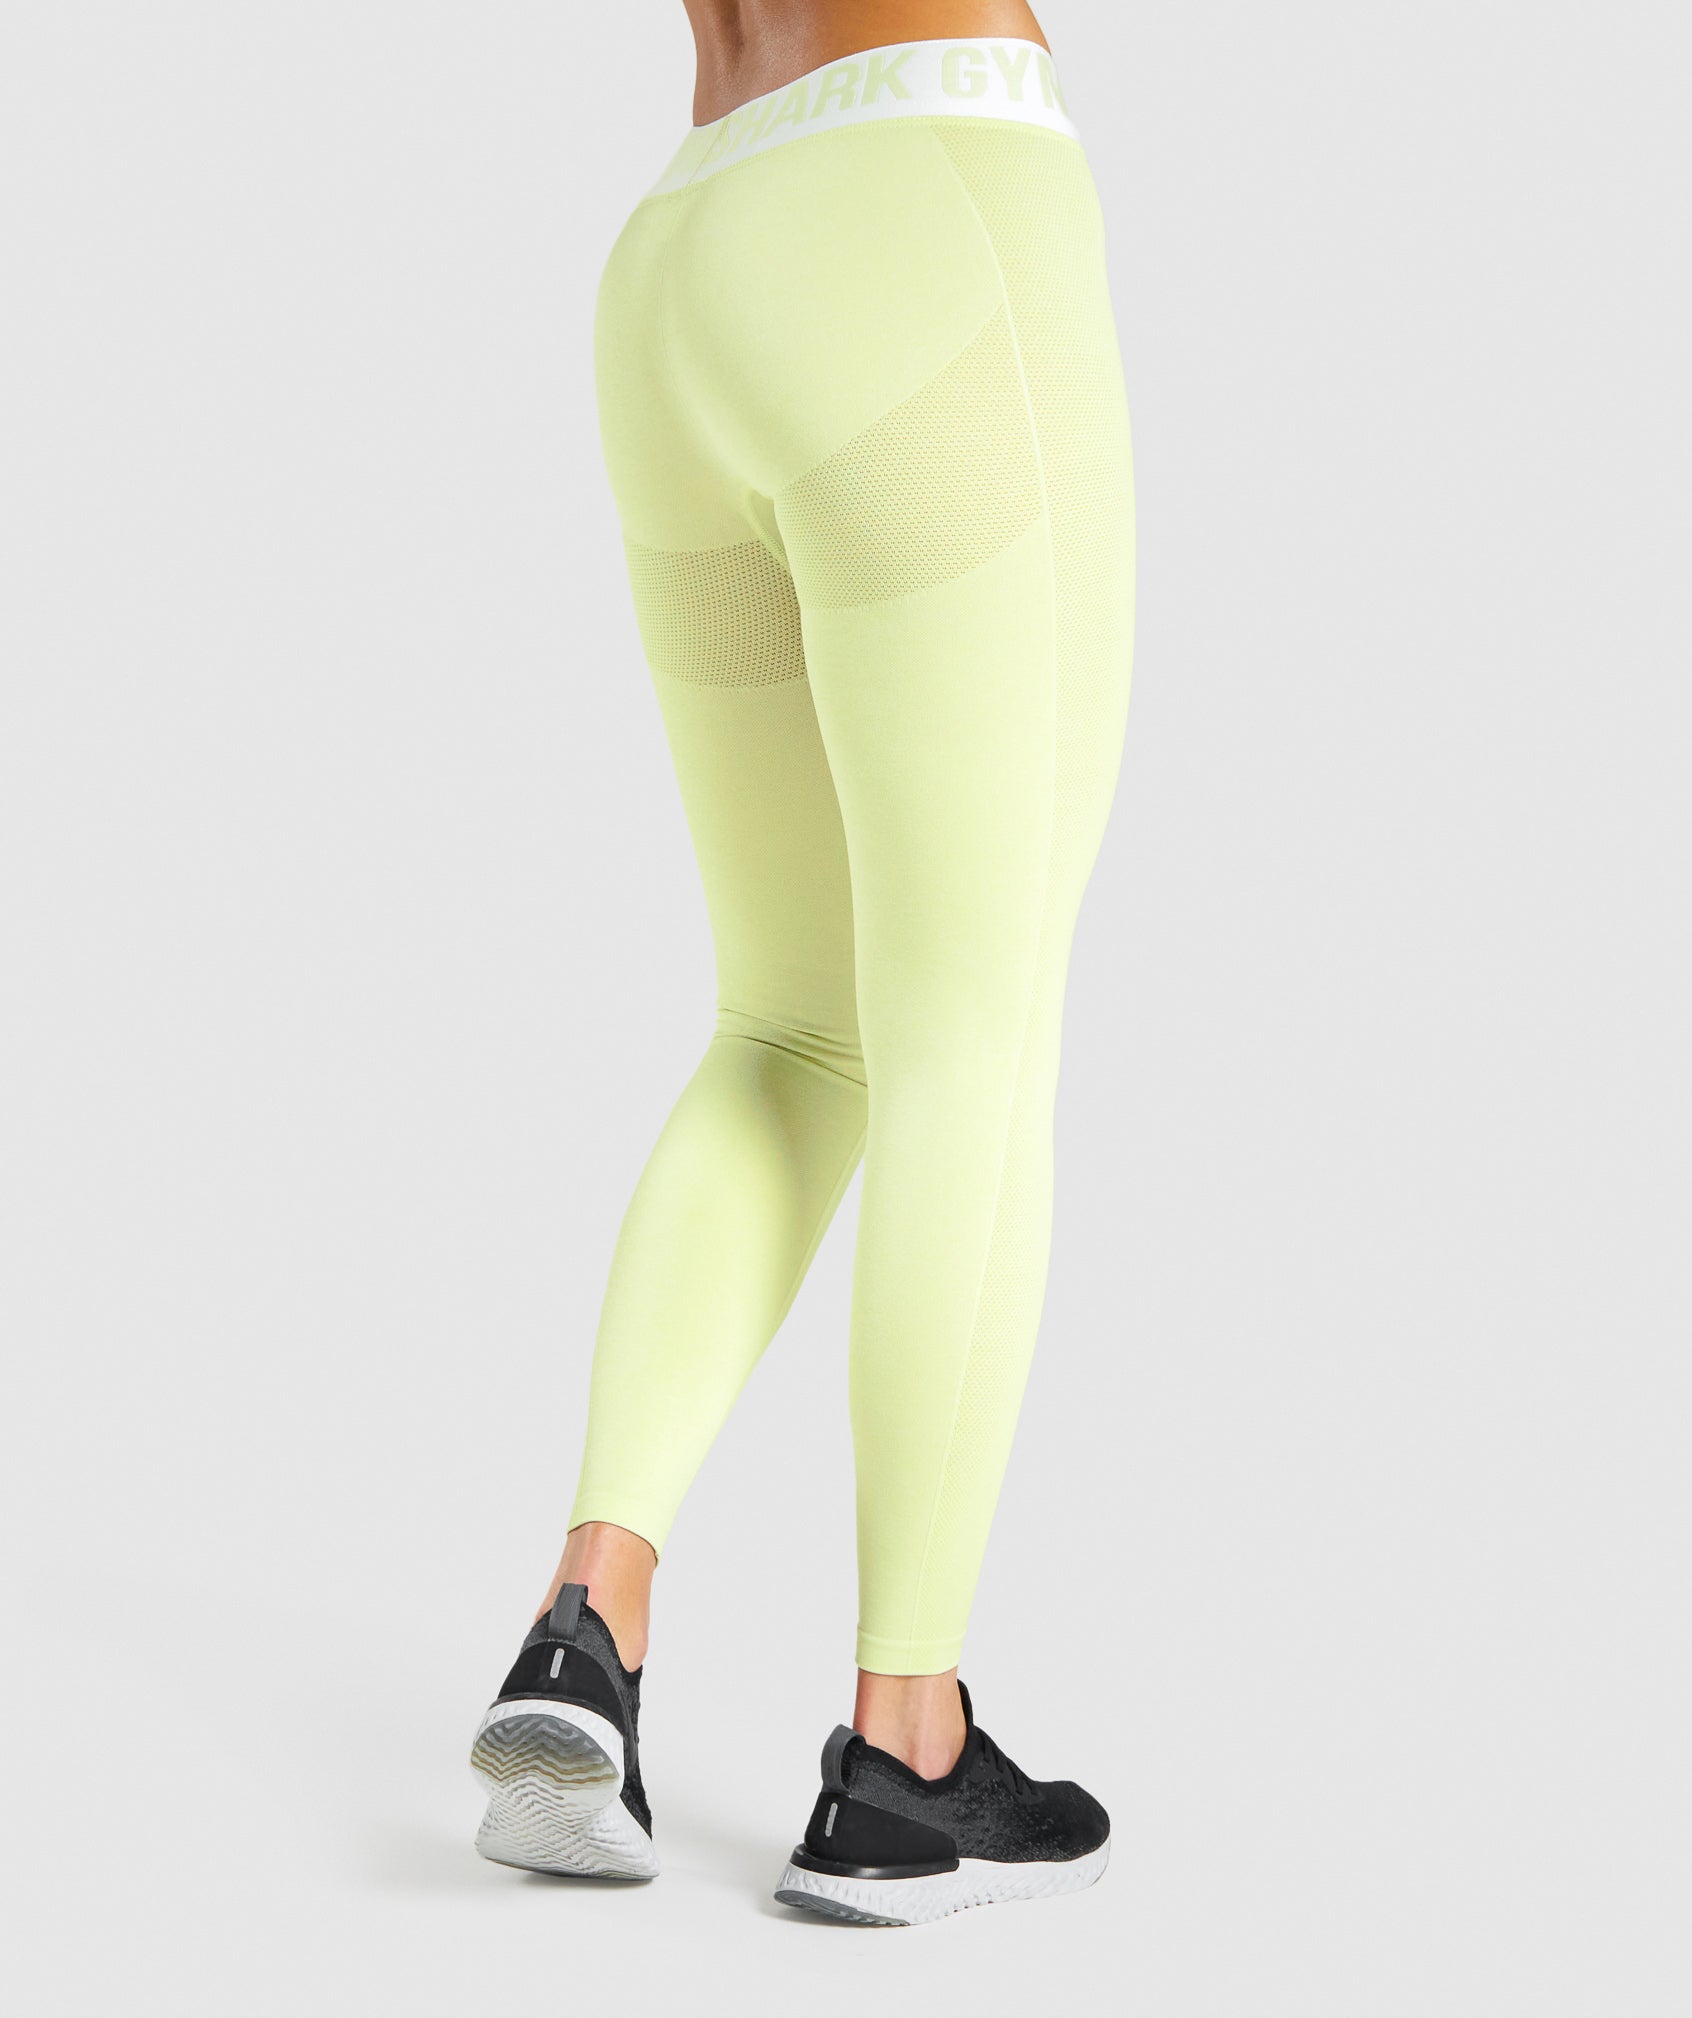 NWT Gymshark Flex Low Rise Leggings - Light Green Marl/Jade Green Size XS